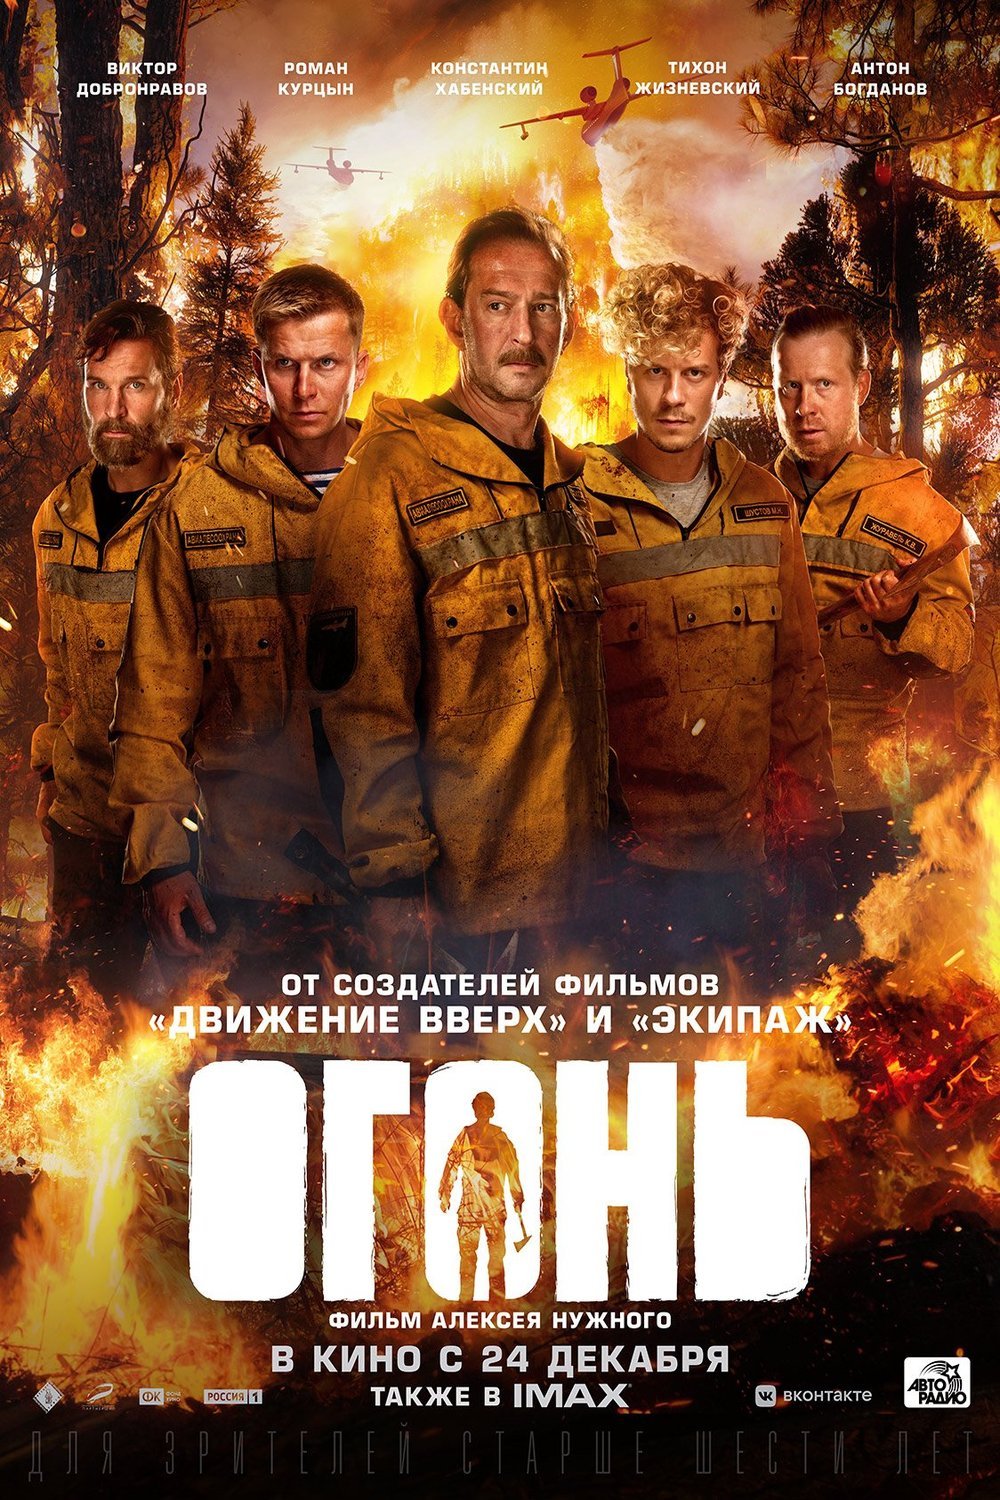 L'affiche originale du film Ogon en russe